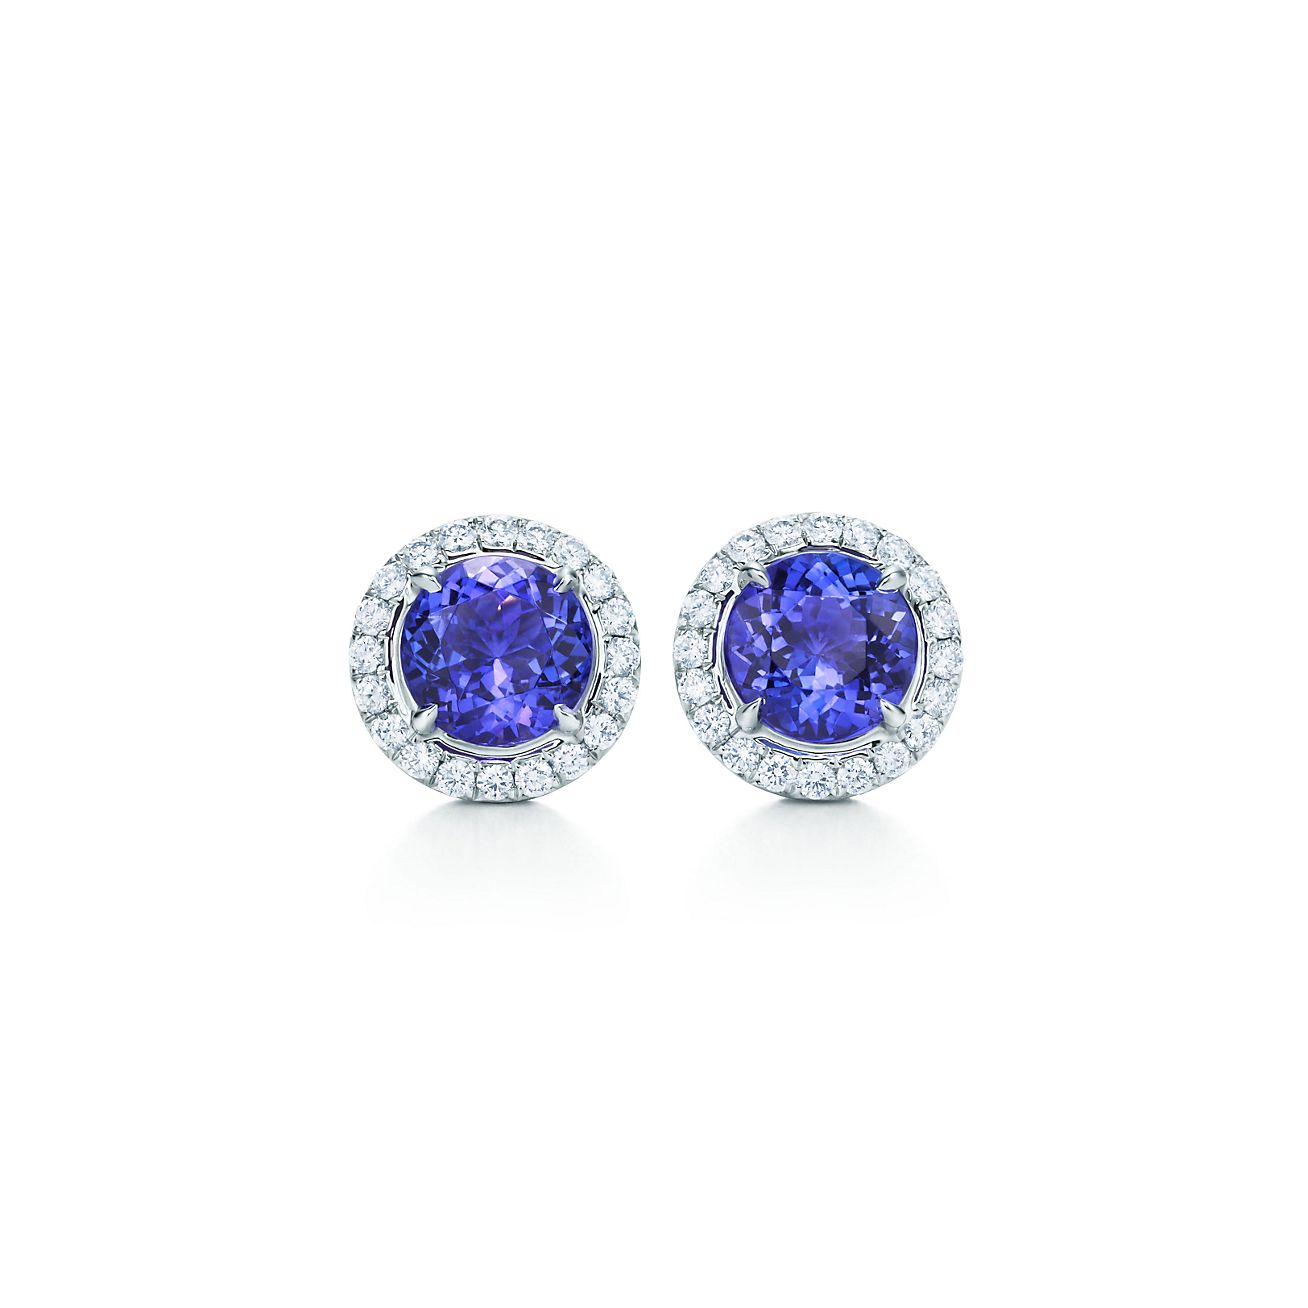 Tiffany Soleste earrings in platinum 